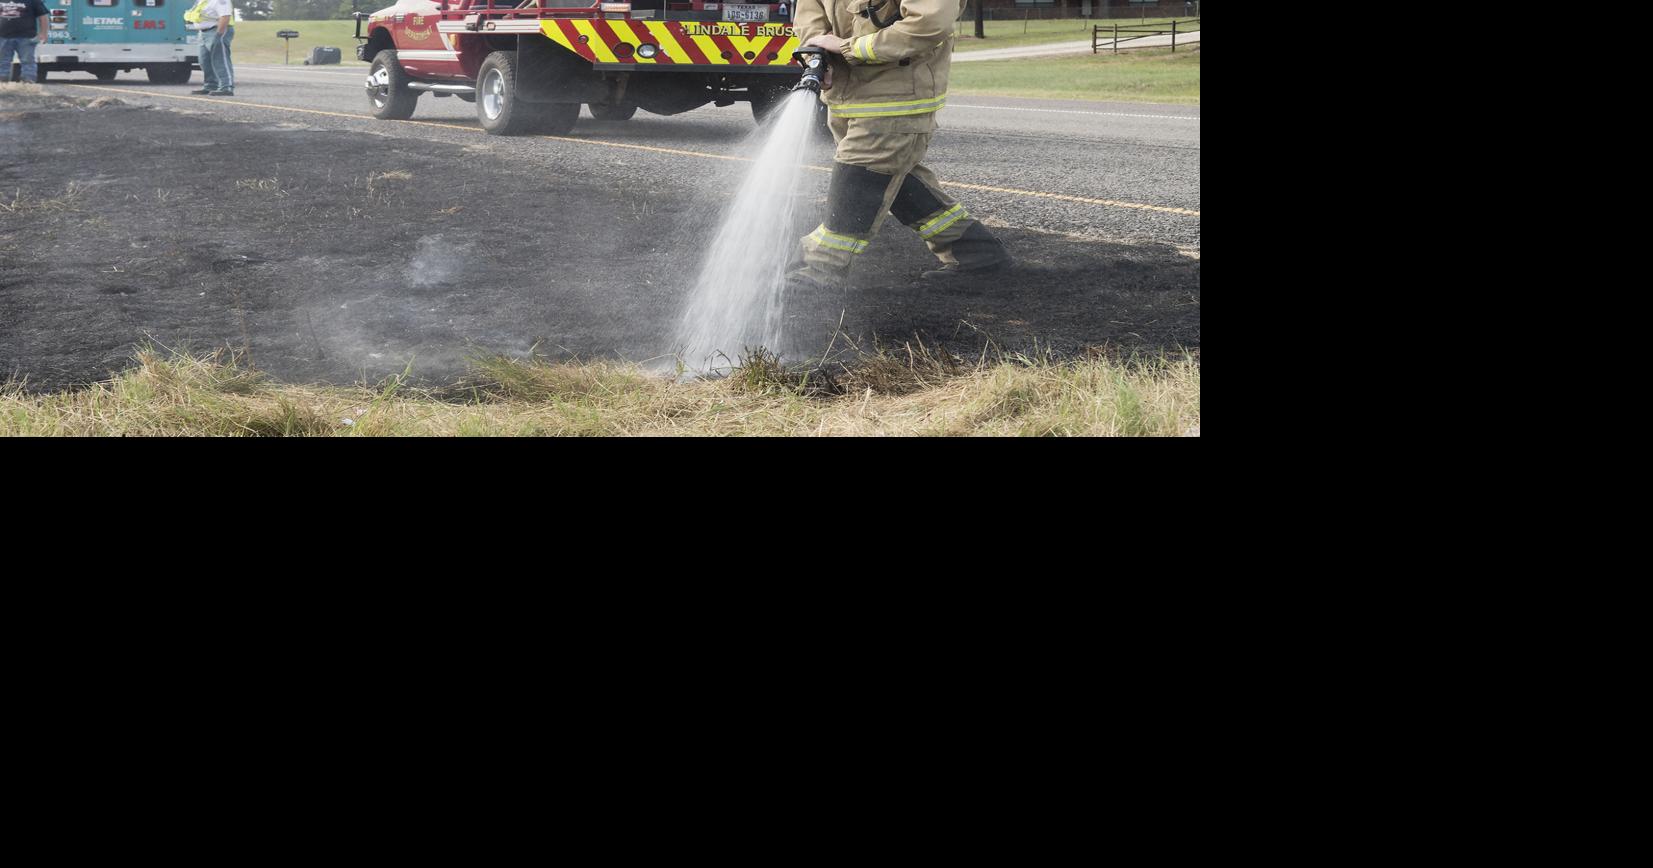 Fire Marshal Rain lessens chance of Smith County burn ban Local News